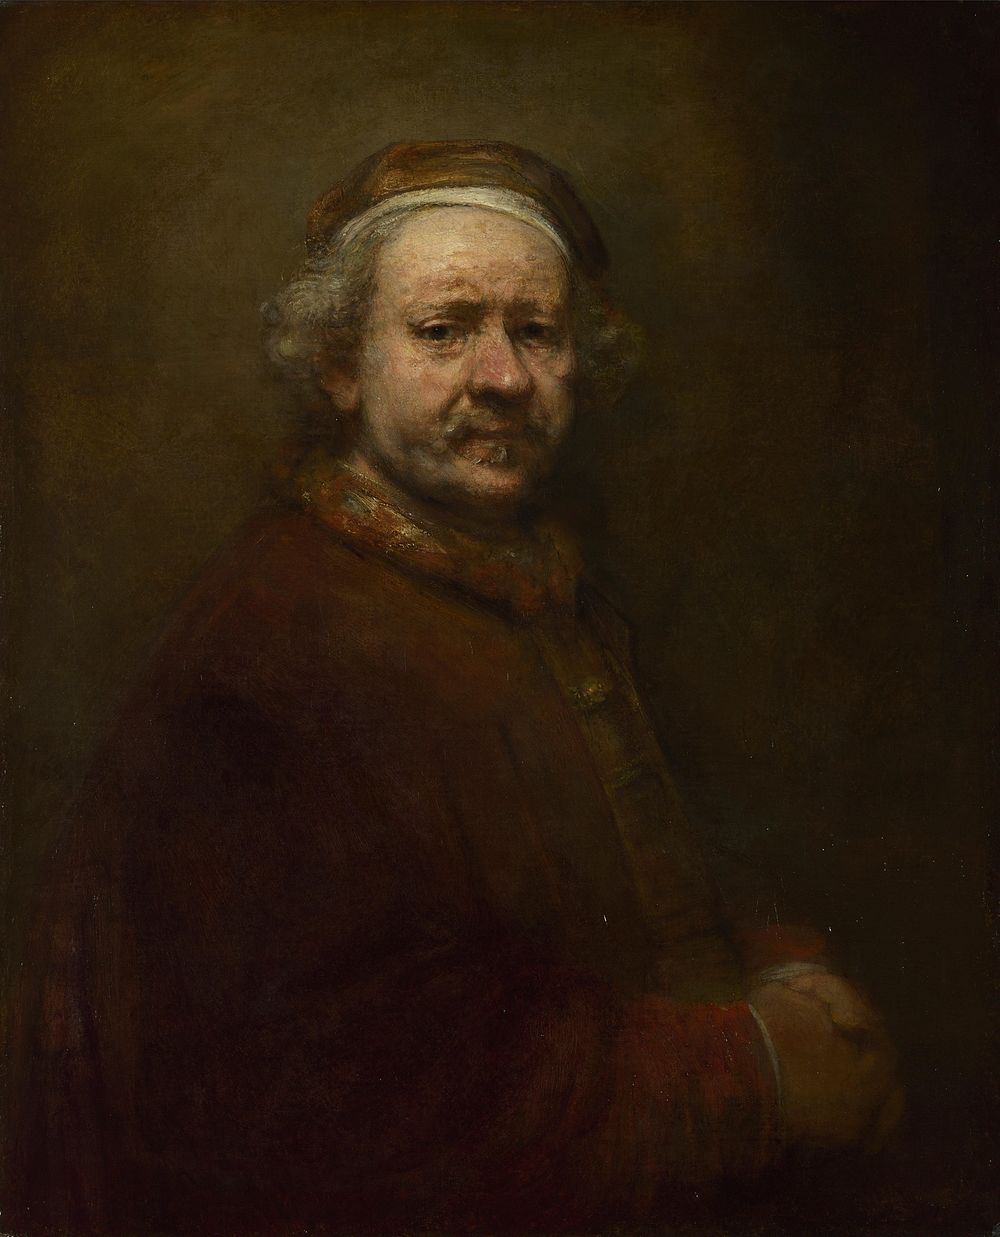 Rembrandt van Rijn's Self Portrait at the Age of 63